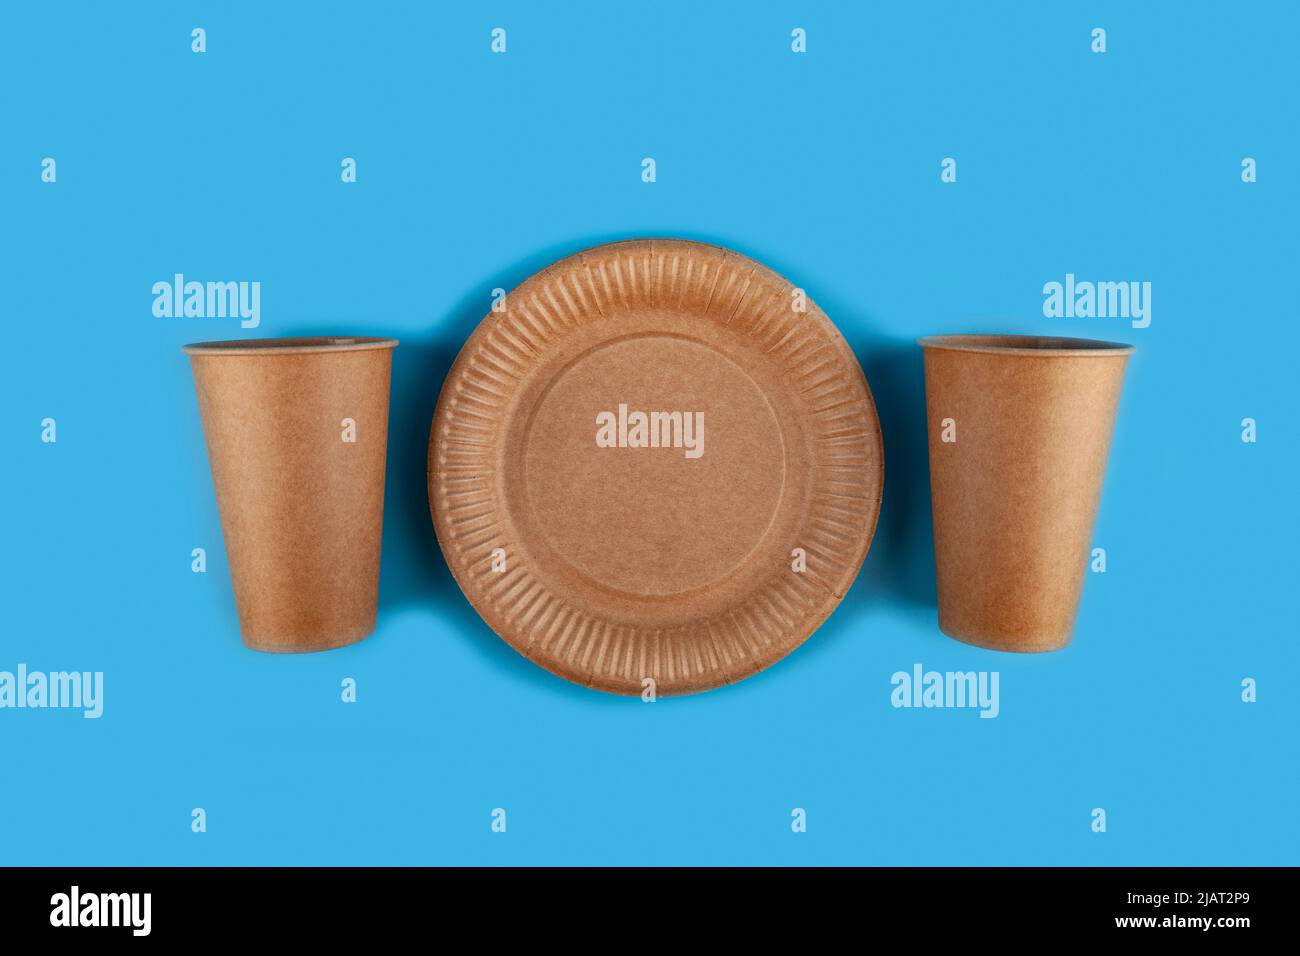 Plato desechable fotografías e imágenes de alta resolución - Alamy